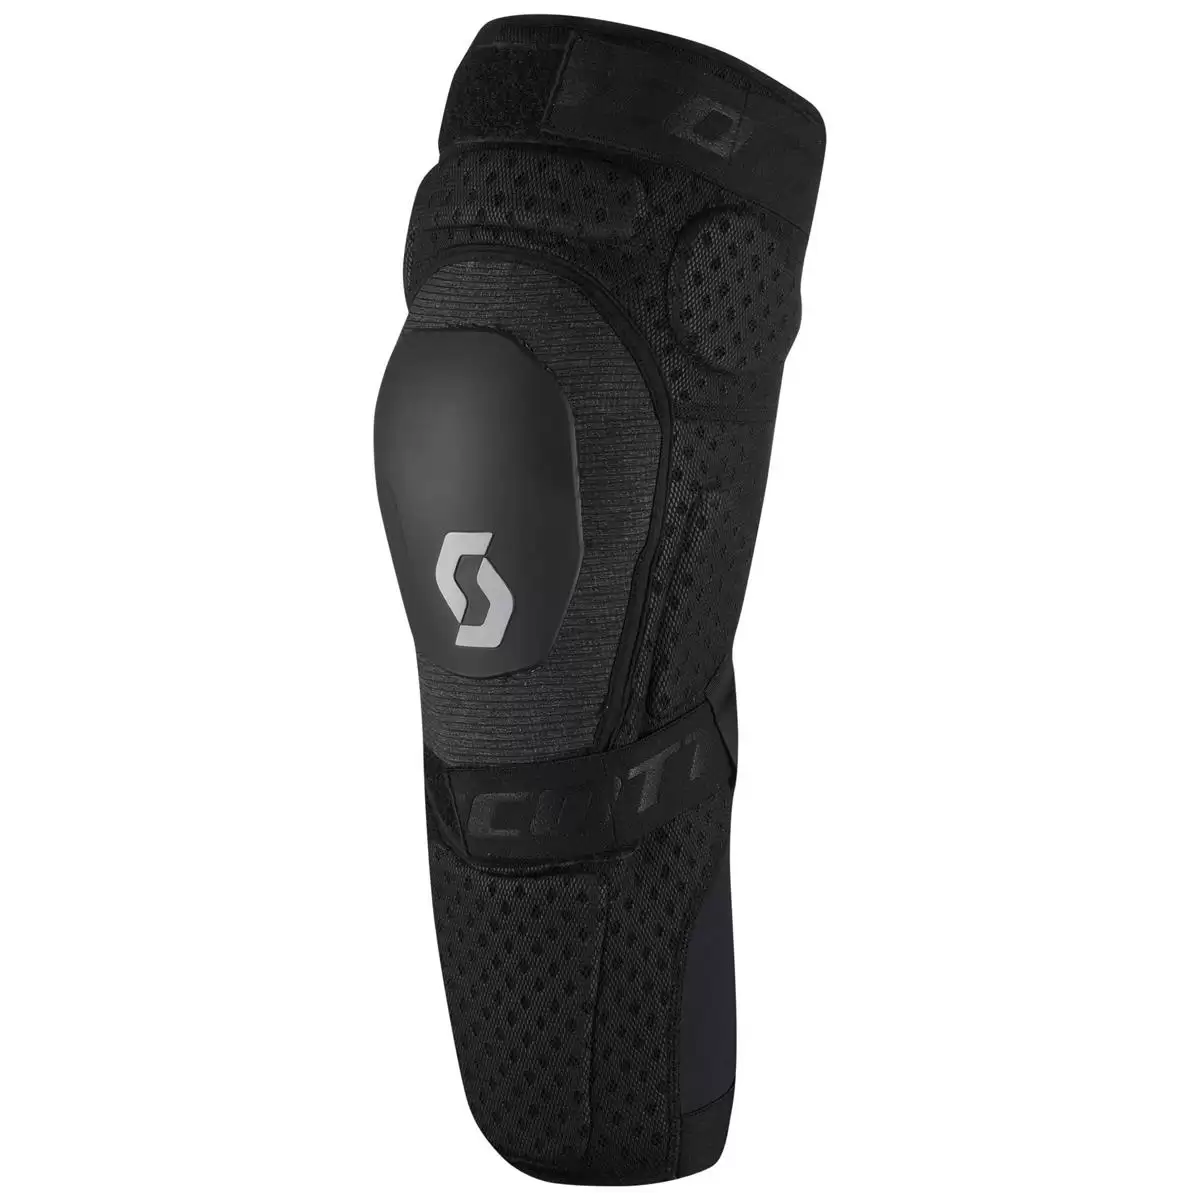 Knee Guard Softcon Hybrid Black - Size L - image